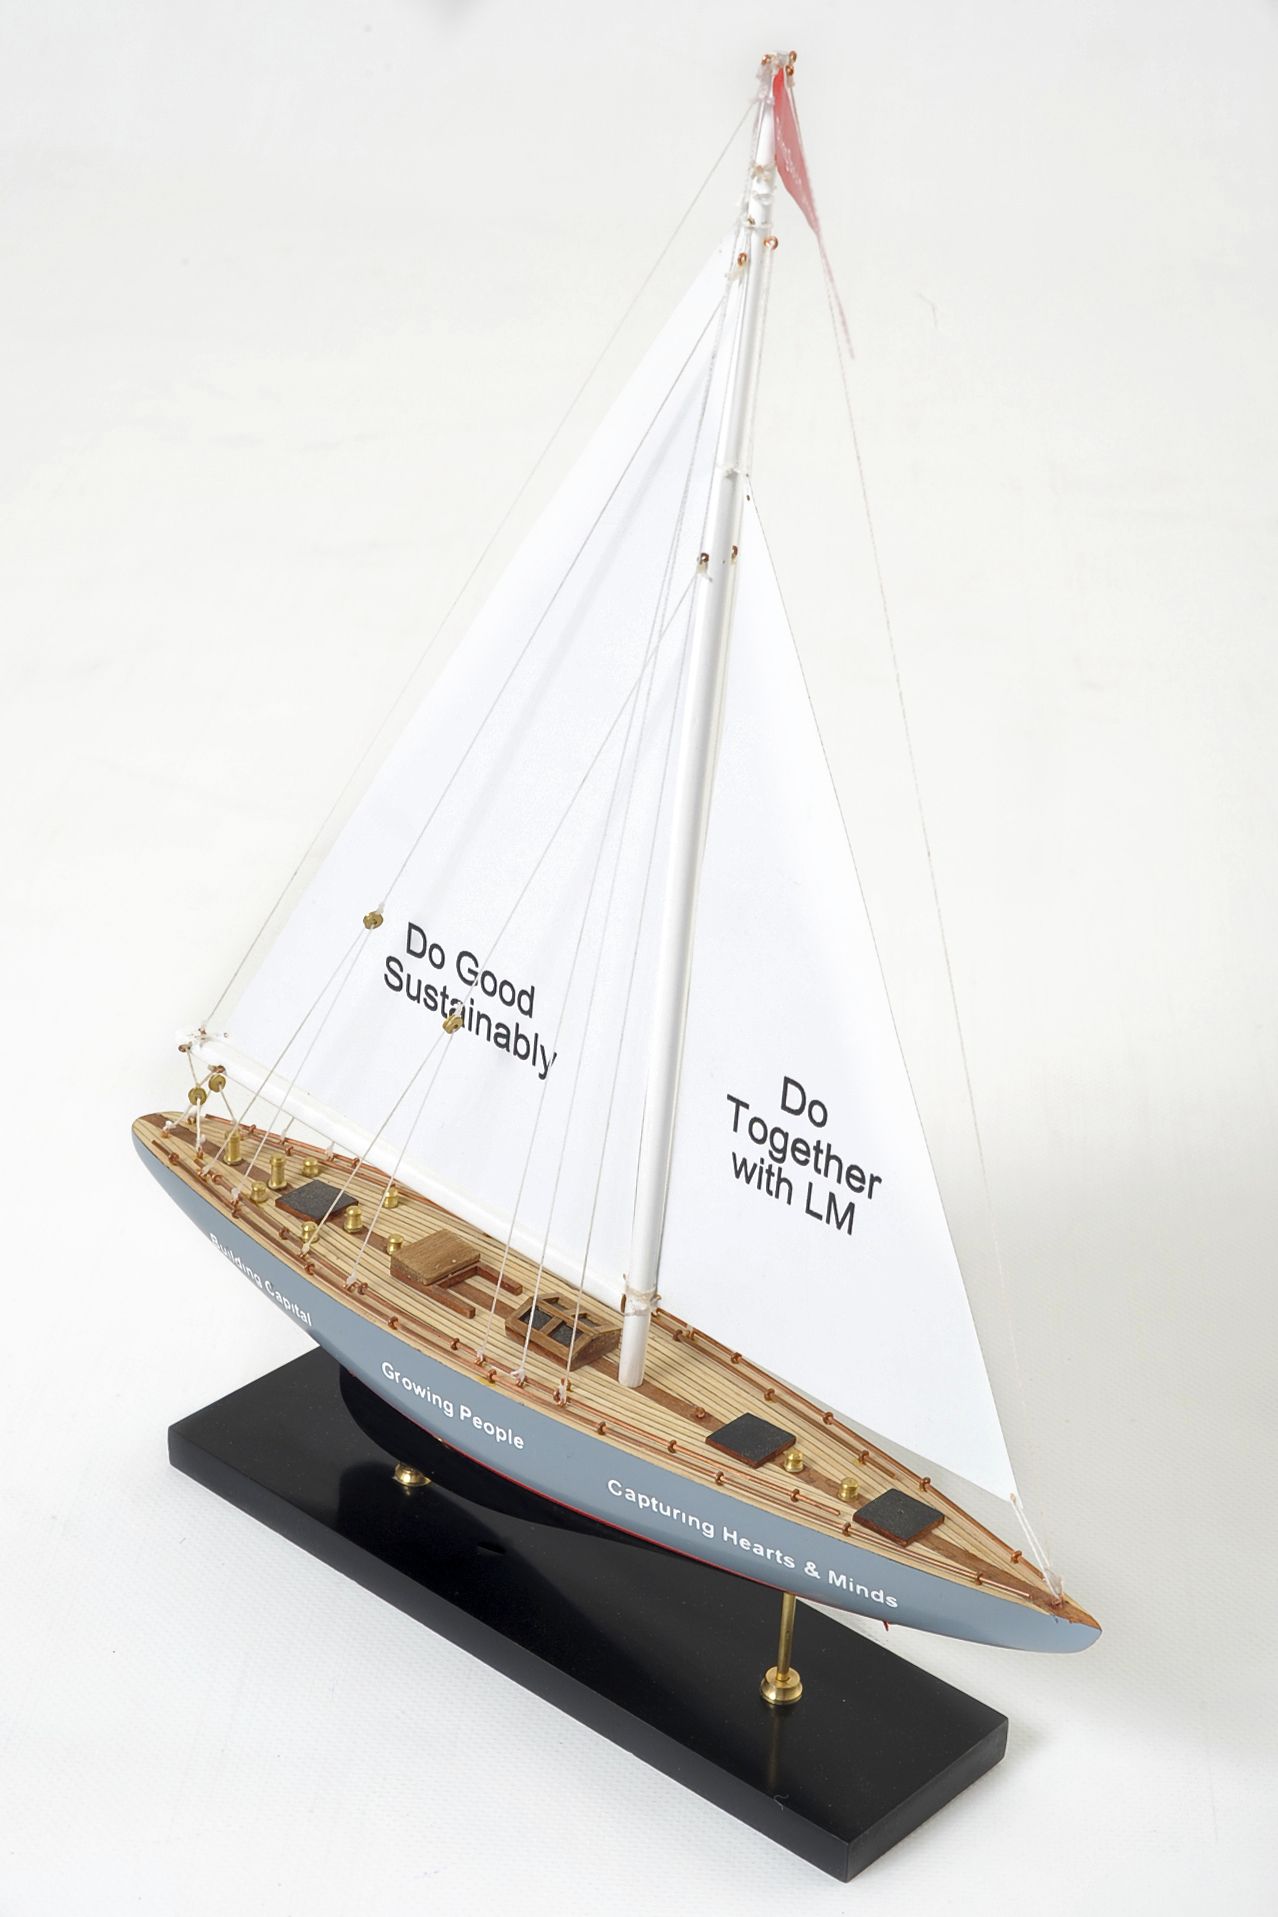 Enterprise Model Yacht